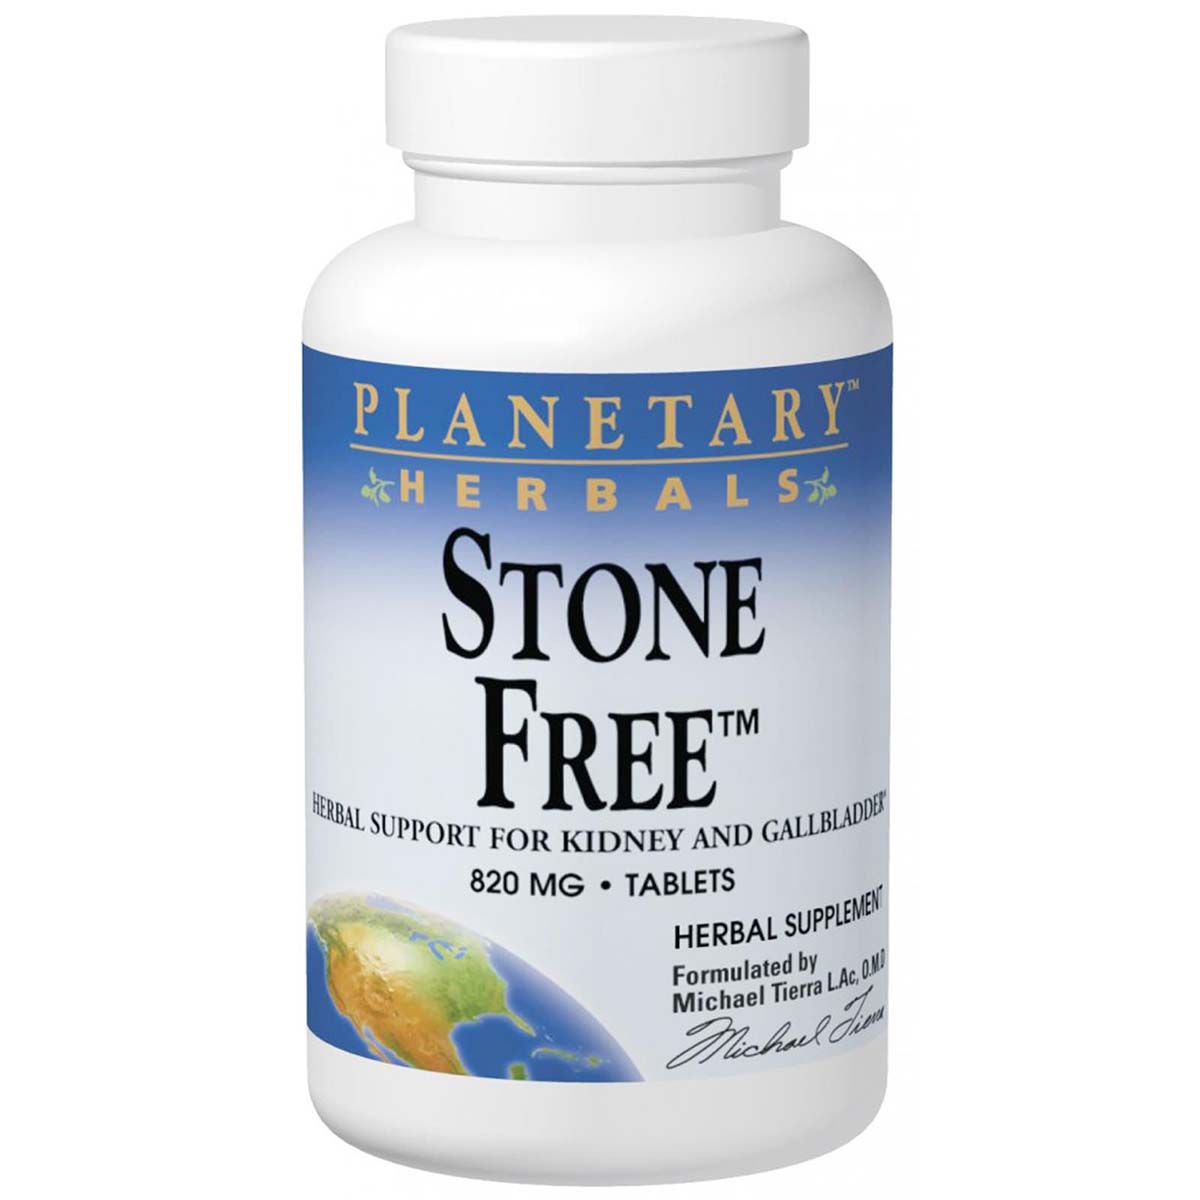 Planetary Herbals Stone Free, 820 mg, 90 Tablets